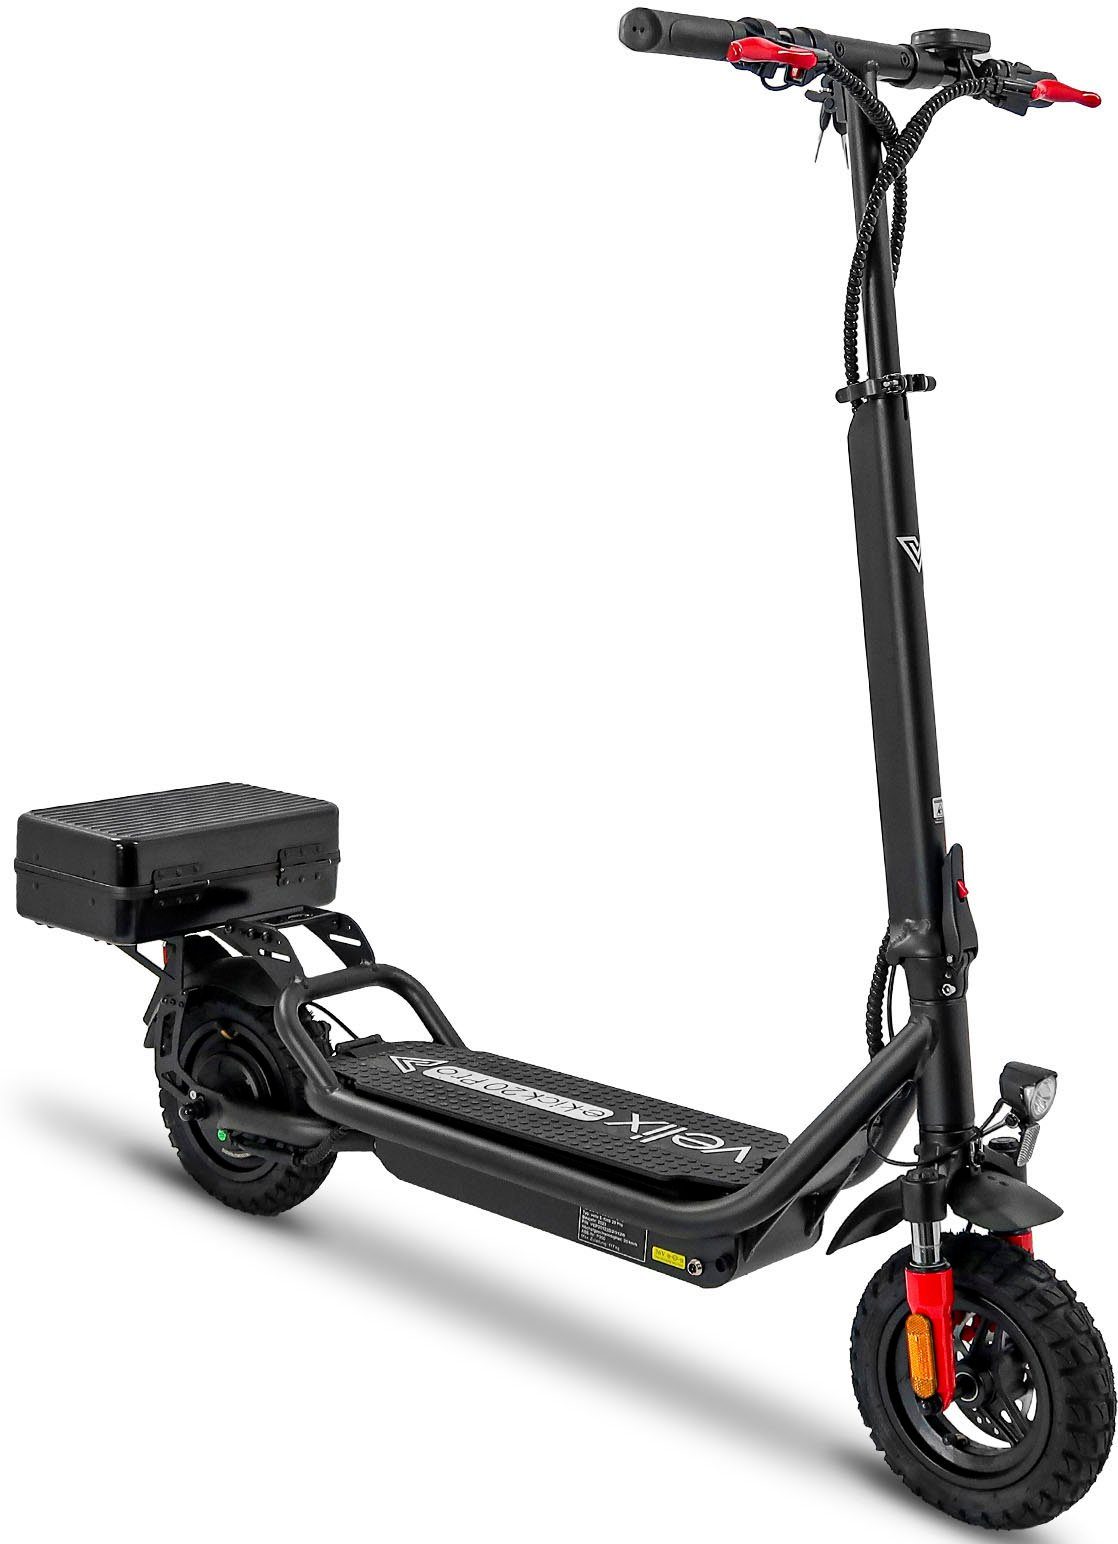 velix E-Scooter 2 km/h, E-Kick Pro, 100 20 bis 20 zu Reichweite Akkus, km